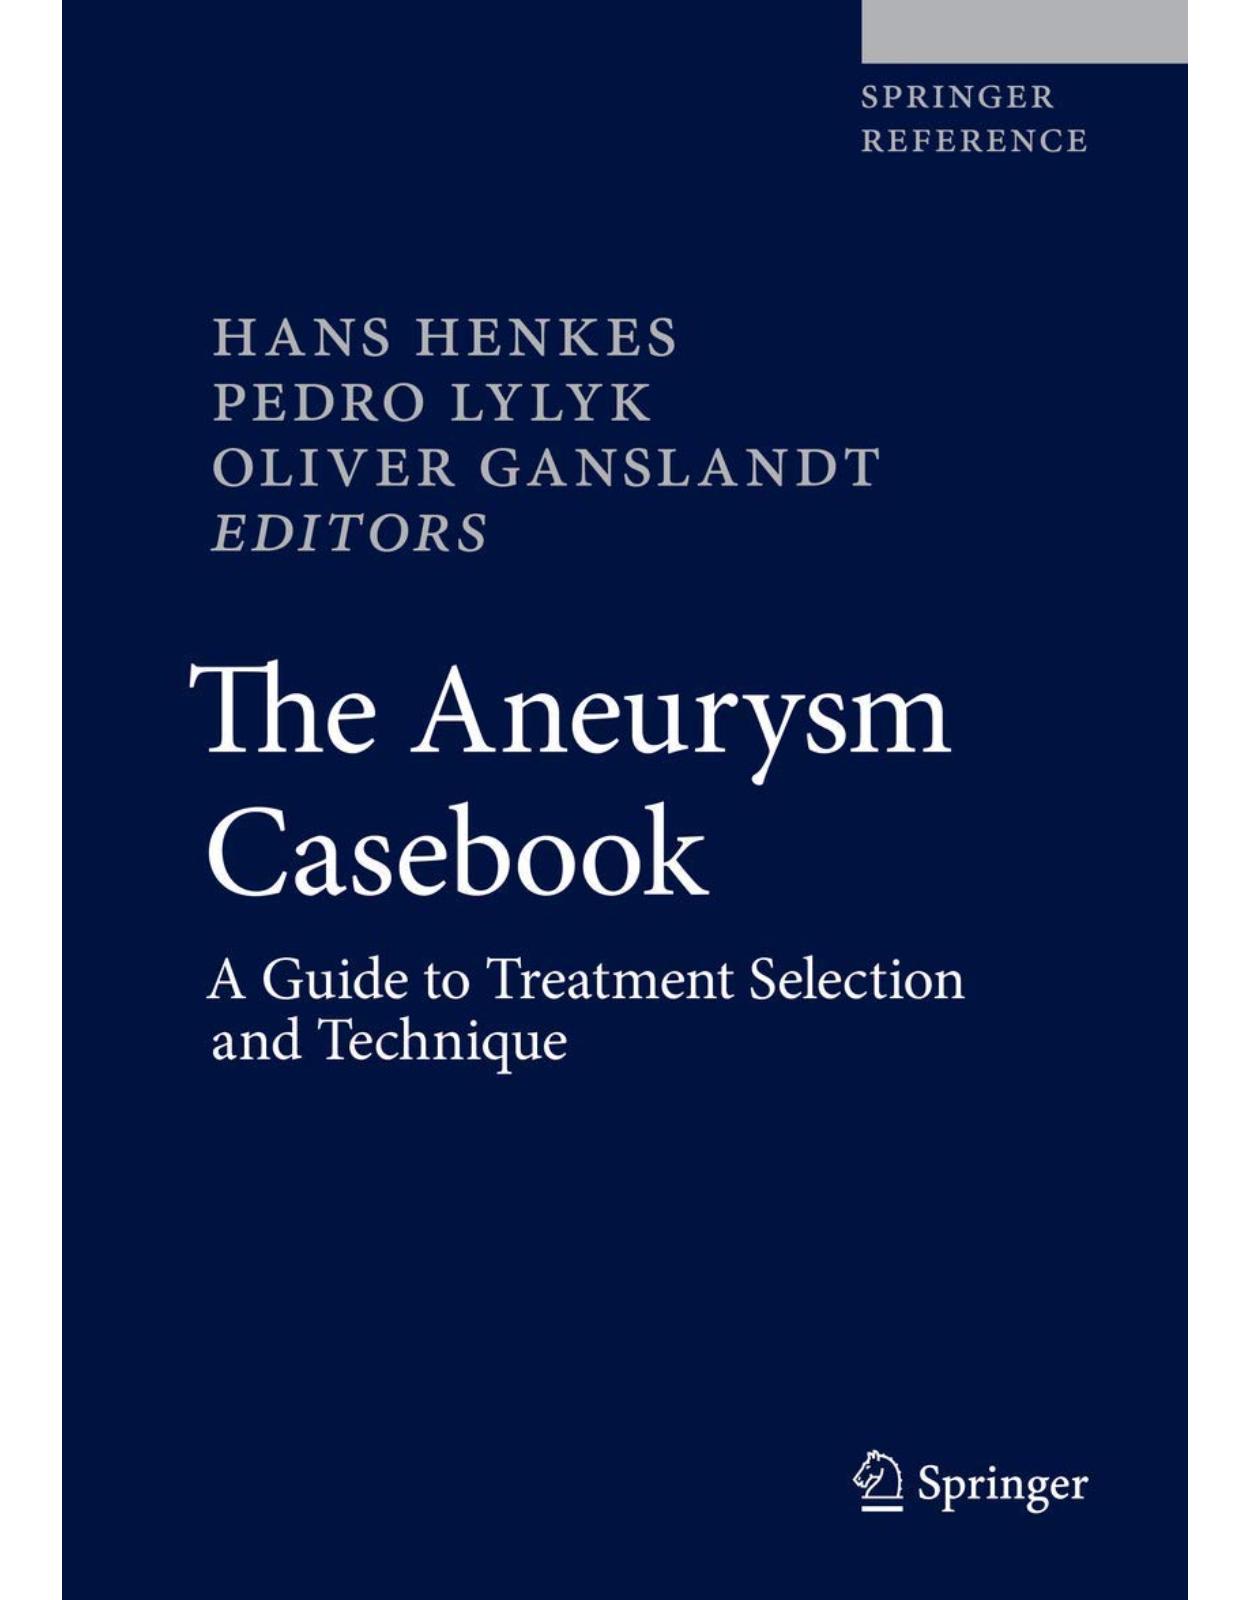 The Aneurysm Casebook